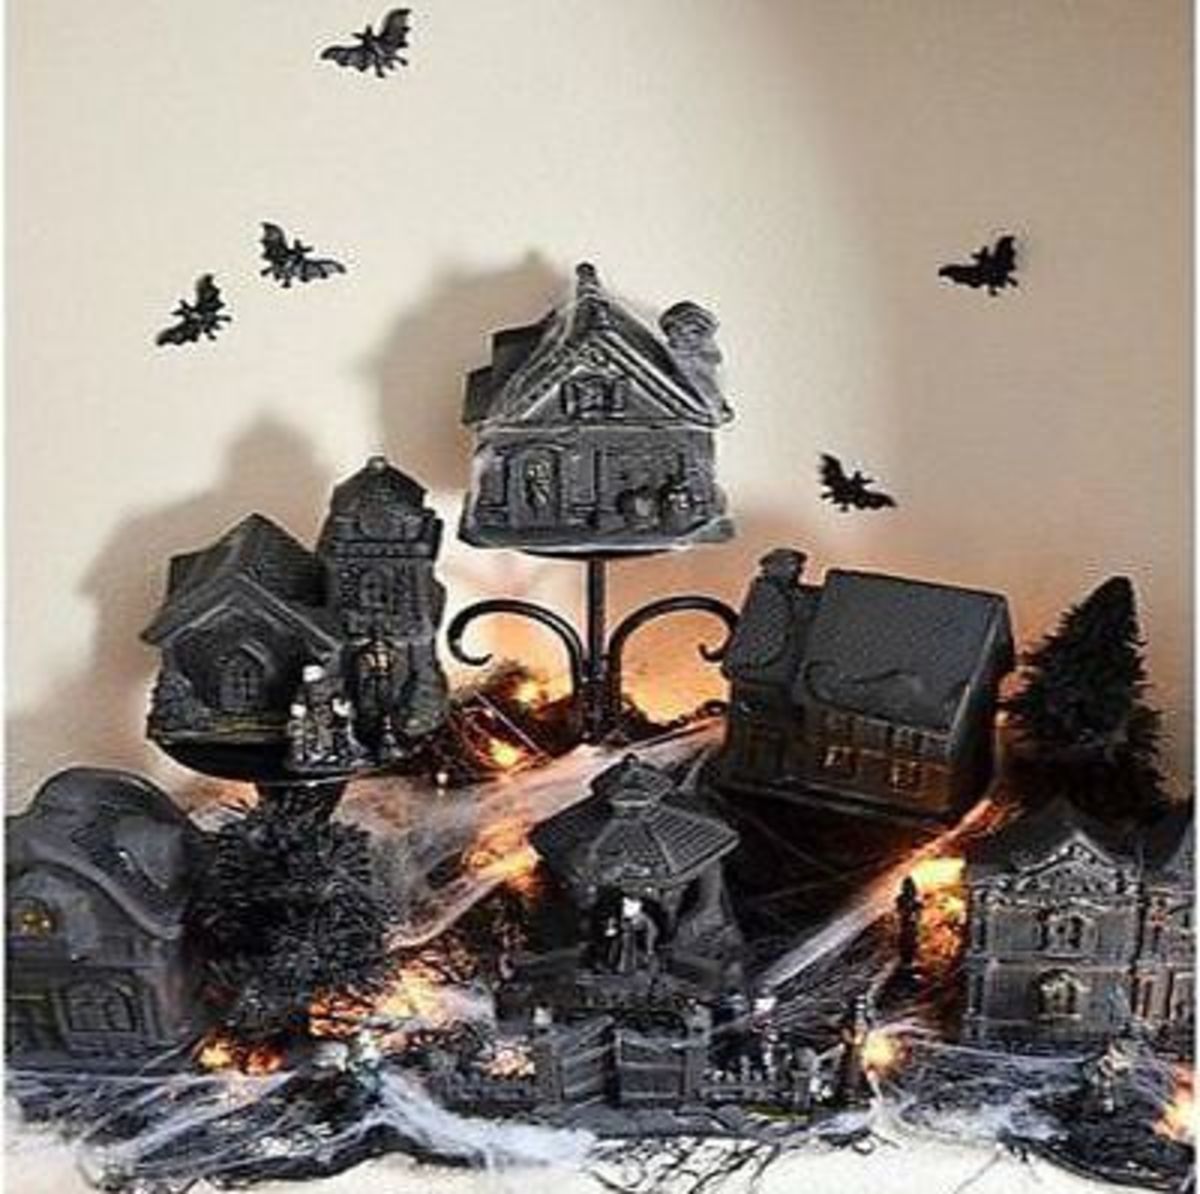 outstanding-halloween-crafts-for-kids